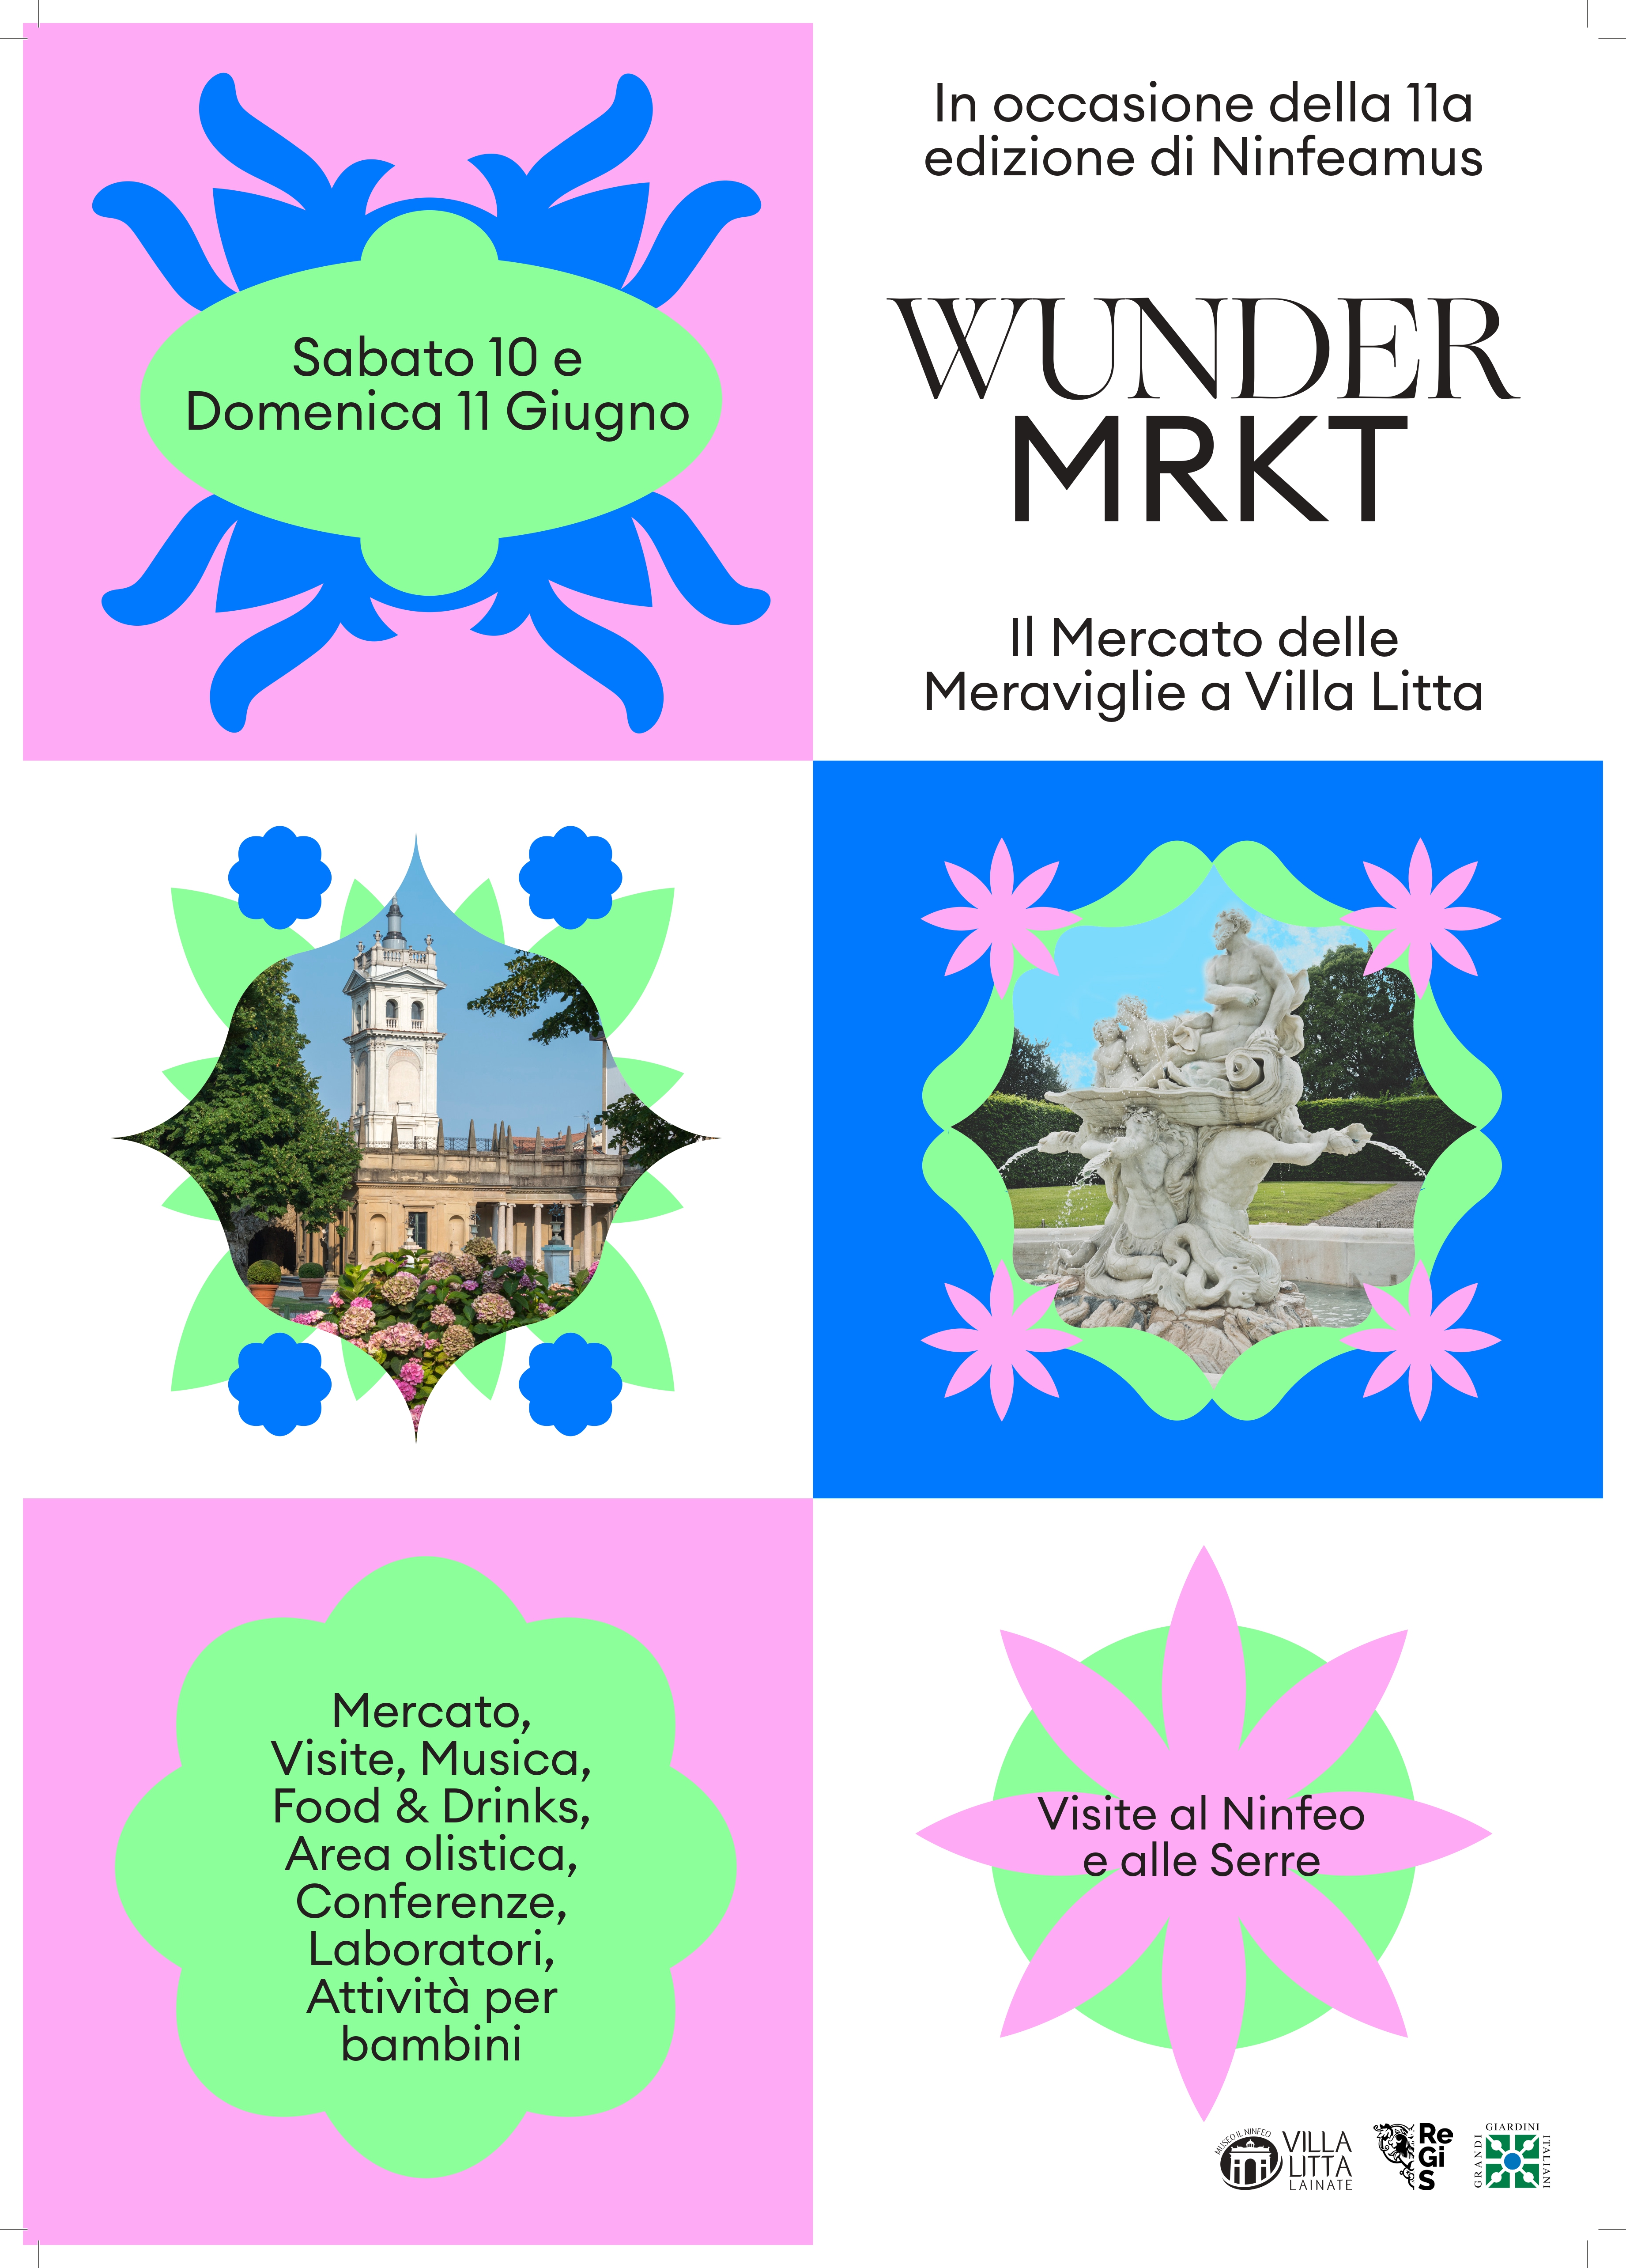 Ninfeamus + Wunder Mrkt: il Mercato delle Meraviglie a Villa Litta